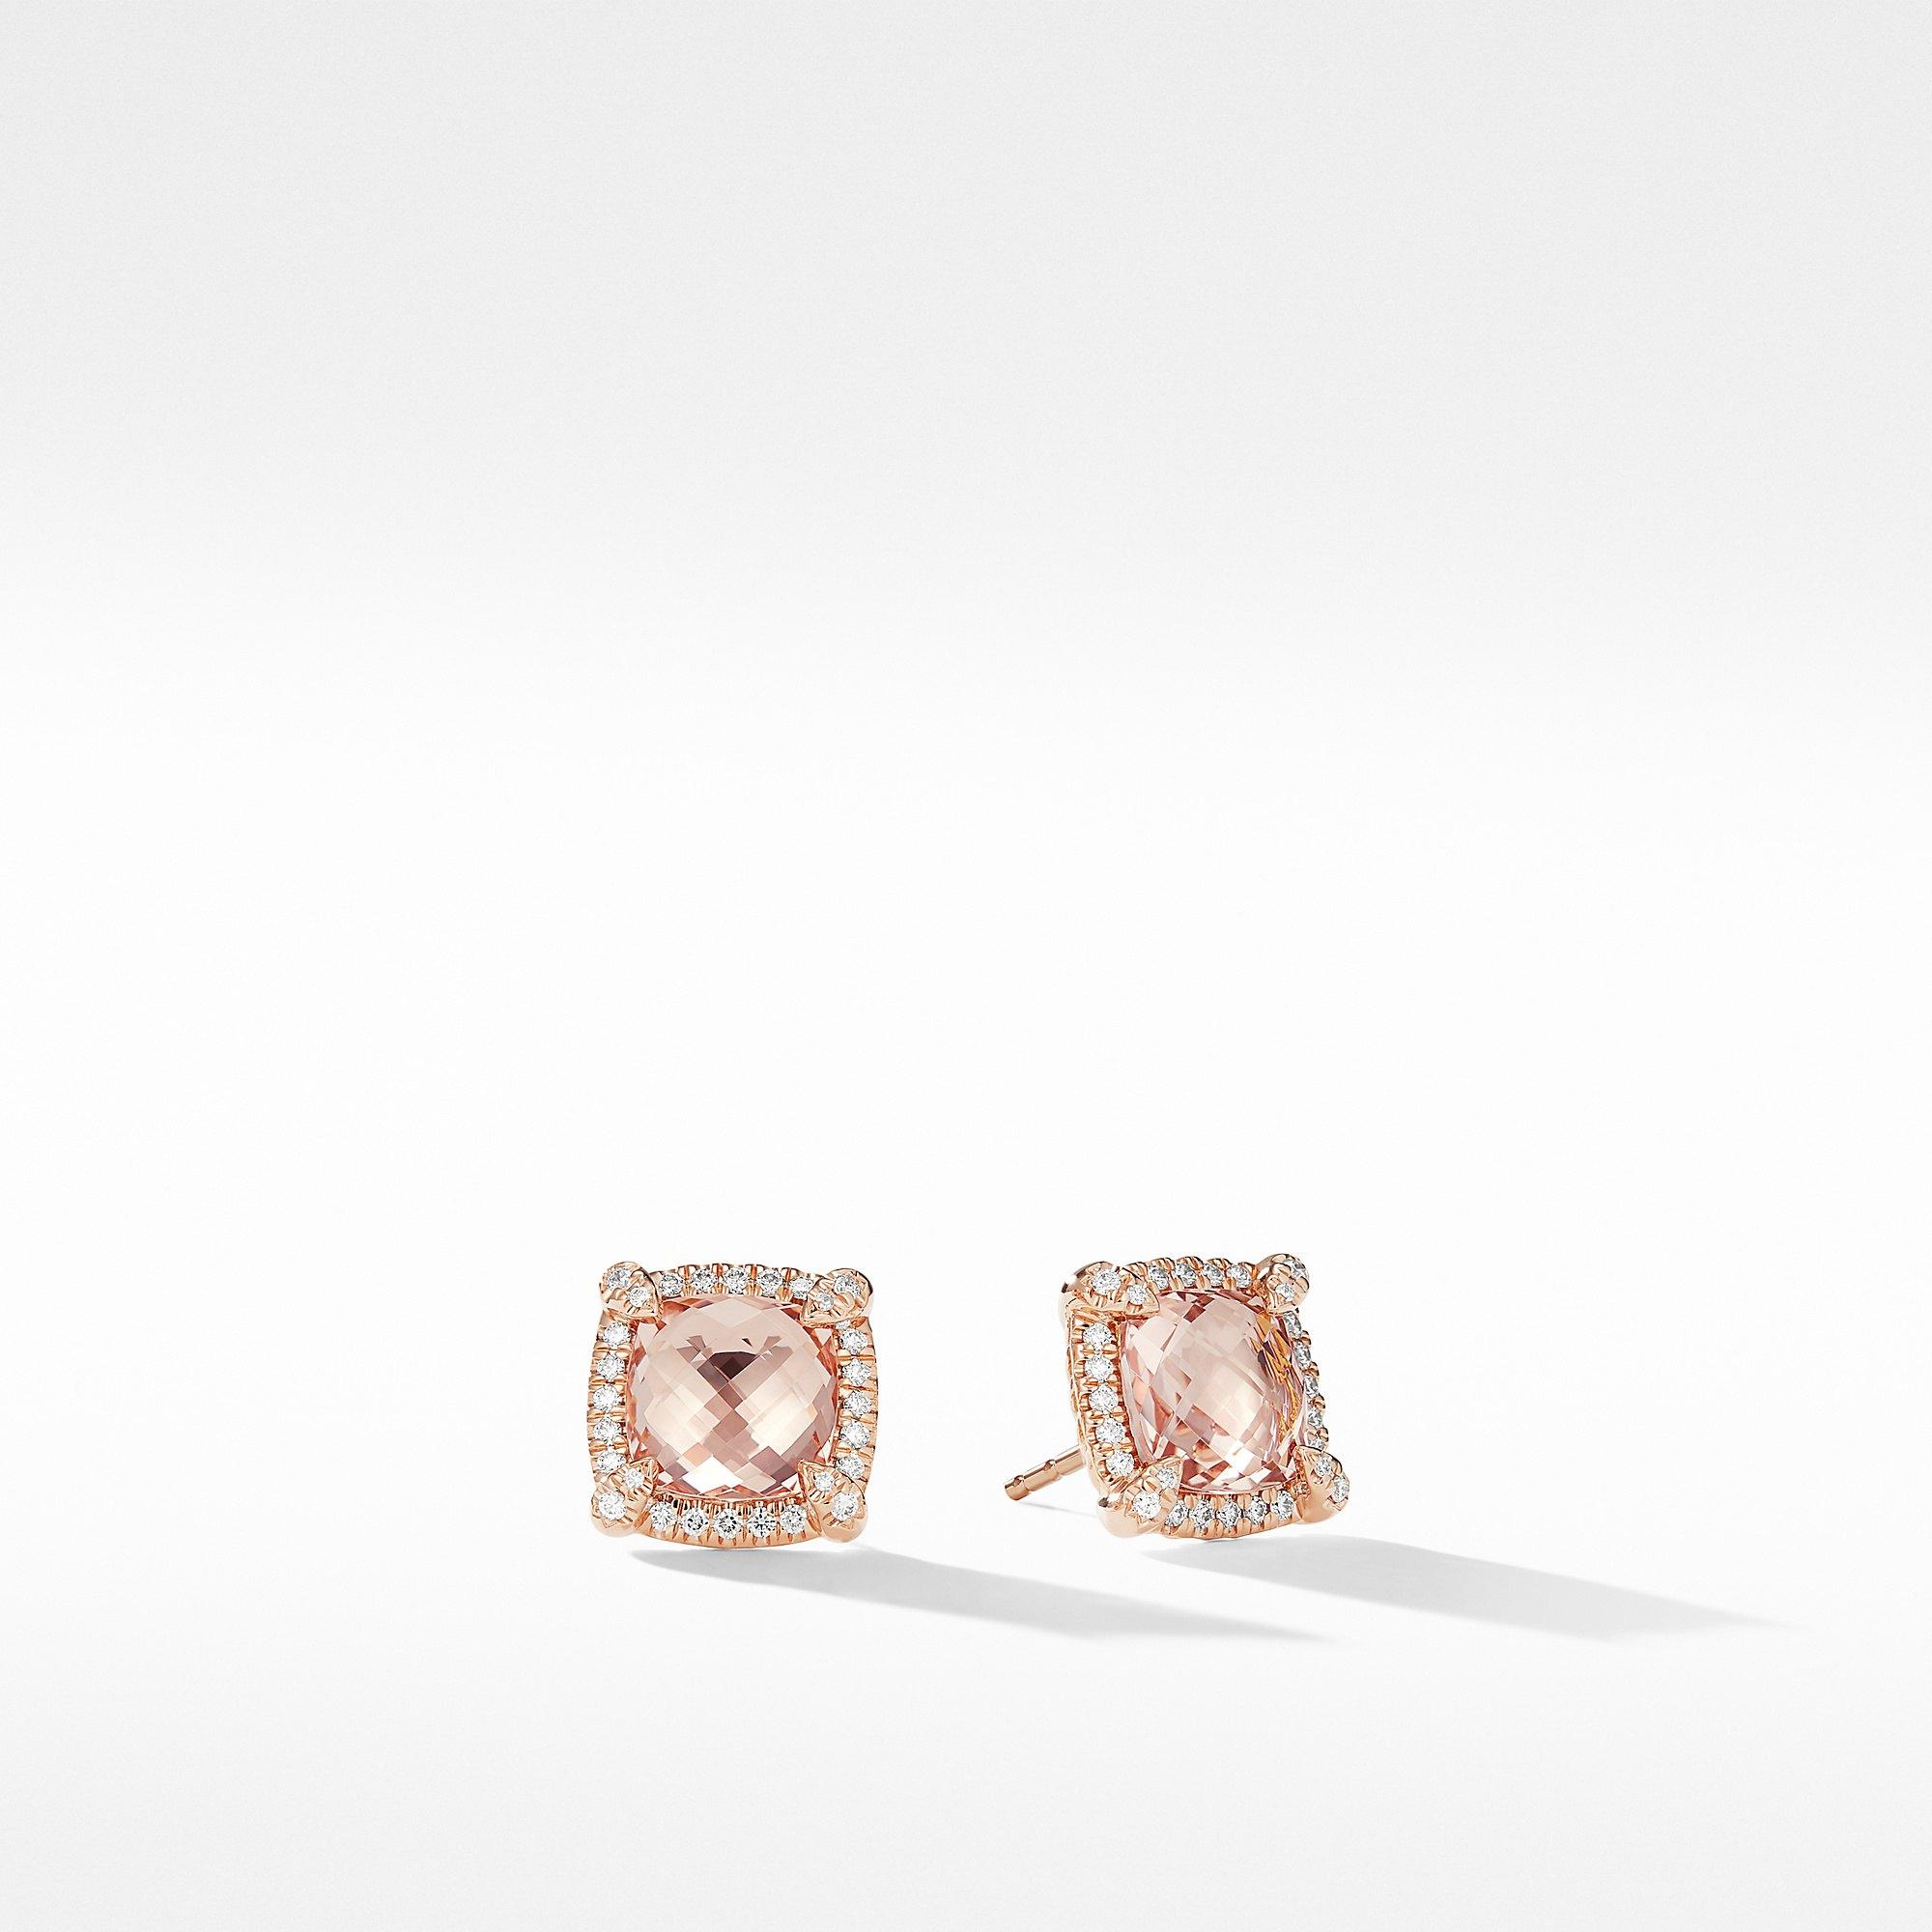 David Yurman Chatelaine Pave Bezel Stud Earrings in 18k Rose Gold with Morganite